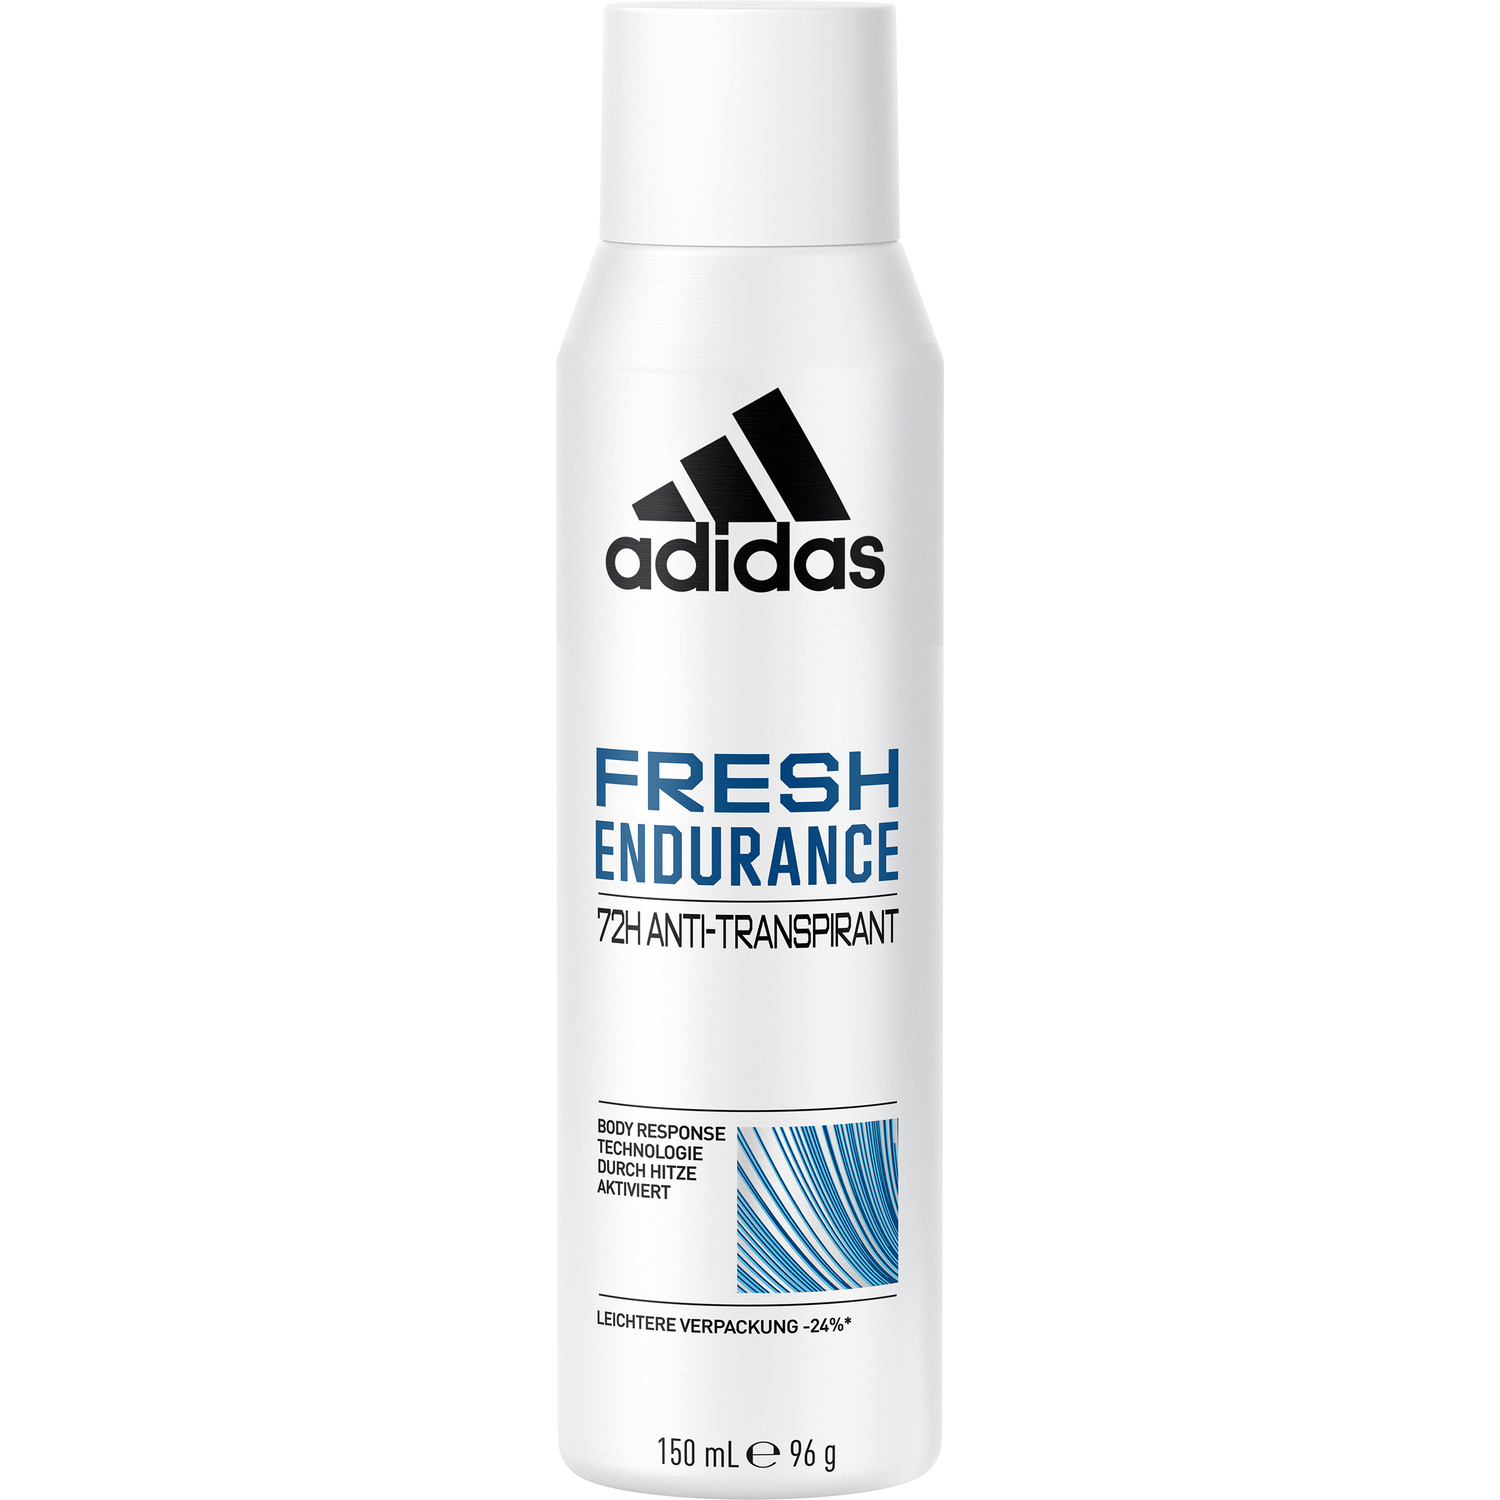 Дезодорант-антиперспирант Adidas Fresh Endurance 72h, 150 мл - фото 1